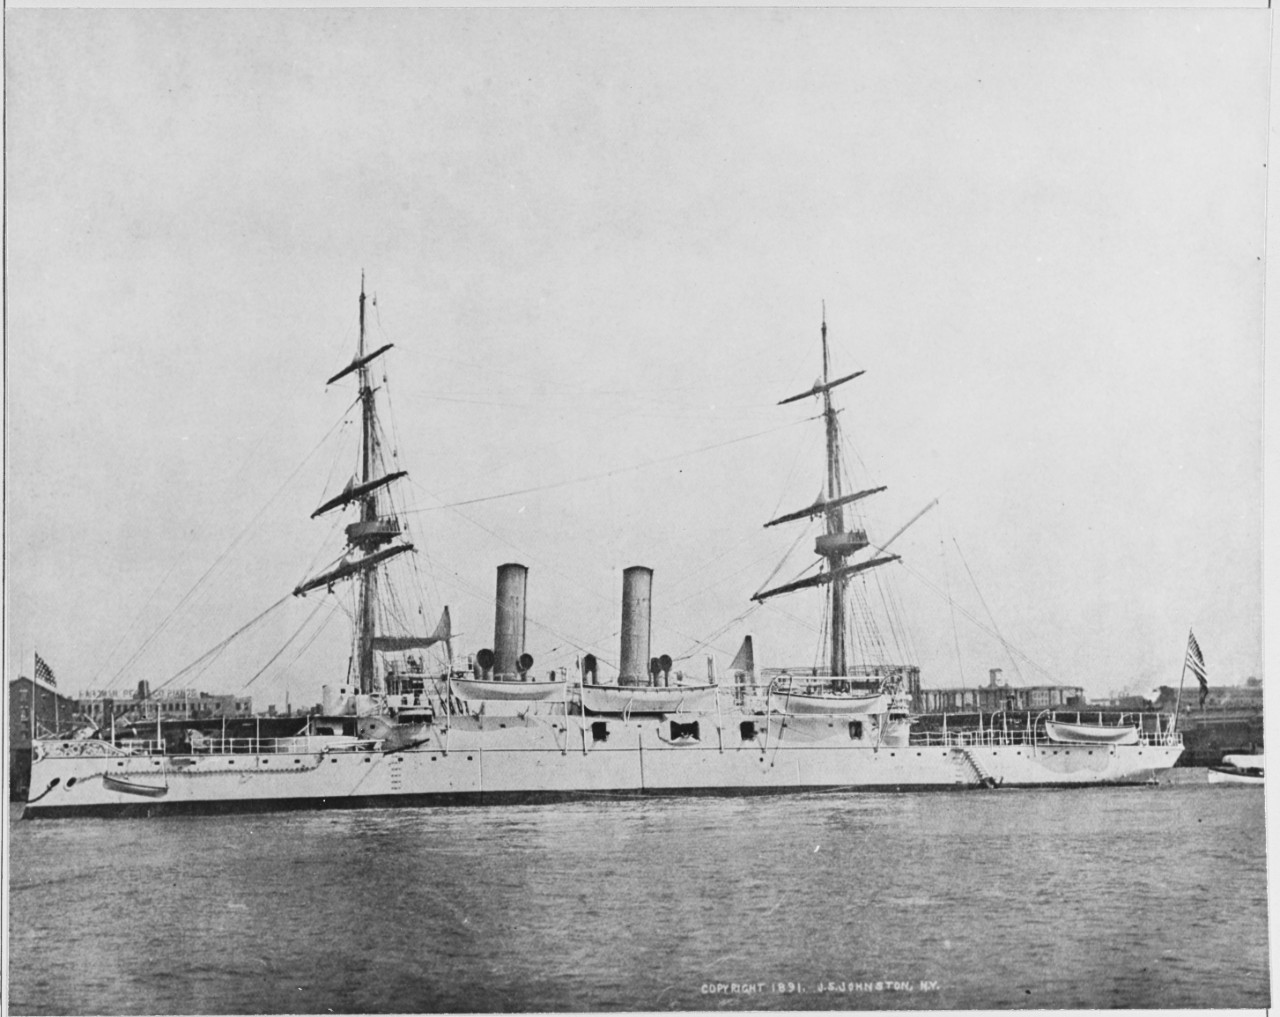 USS BOSTON, 1887-1946